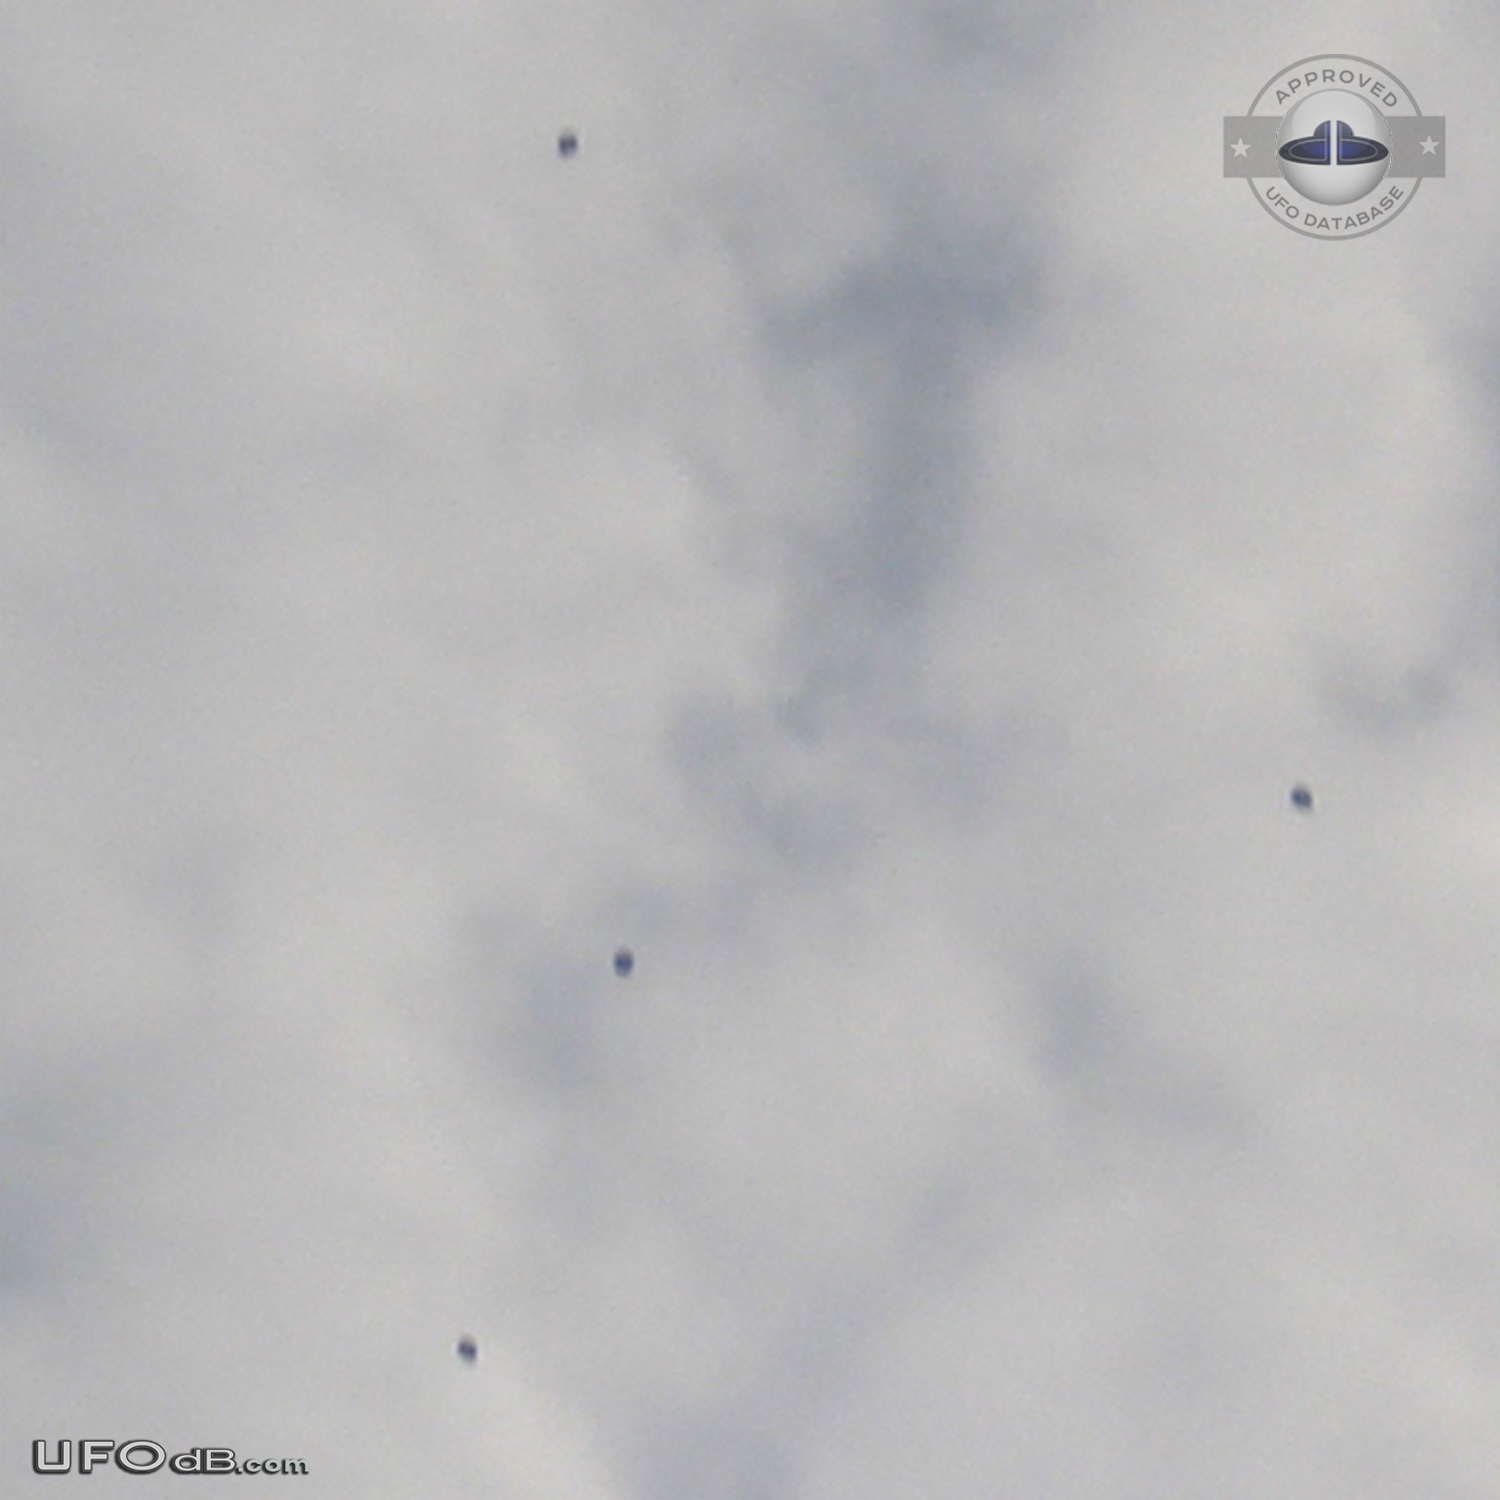 Four grey black disc UFOs near the airplane Mississauga, Ontario 2010 UFO Picture #531-1